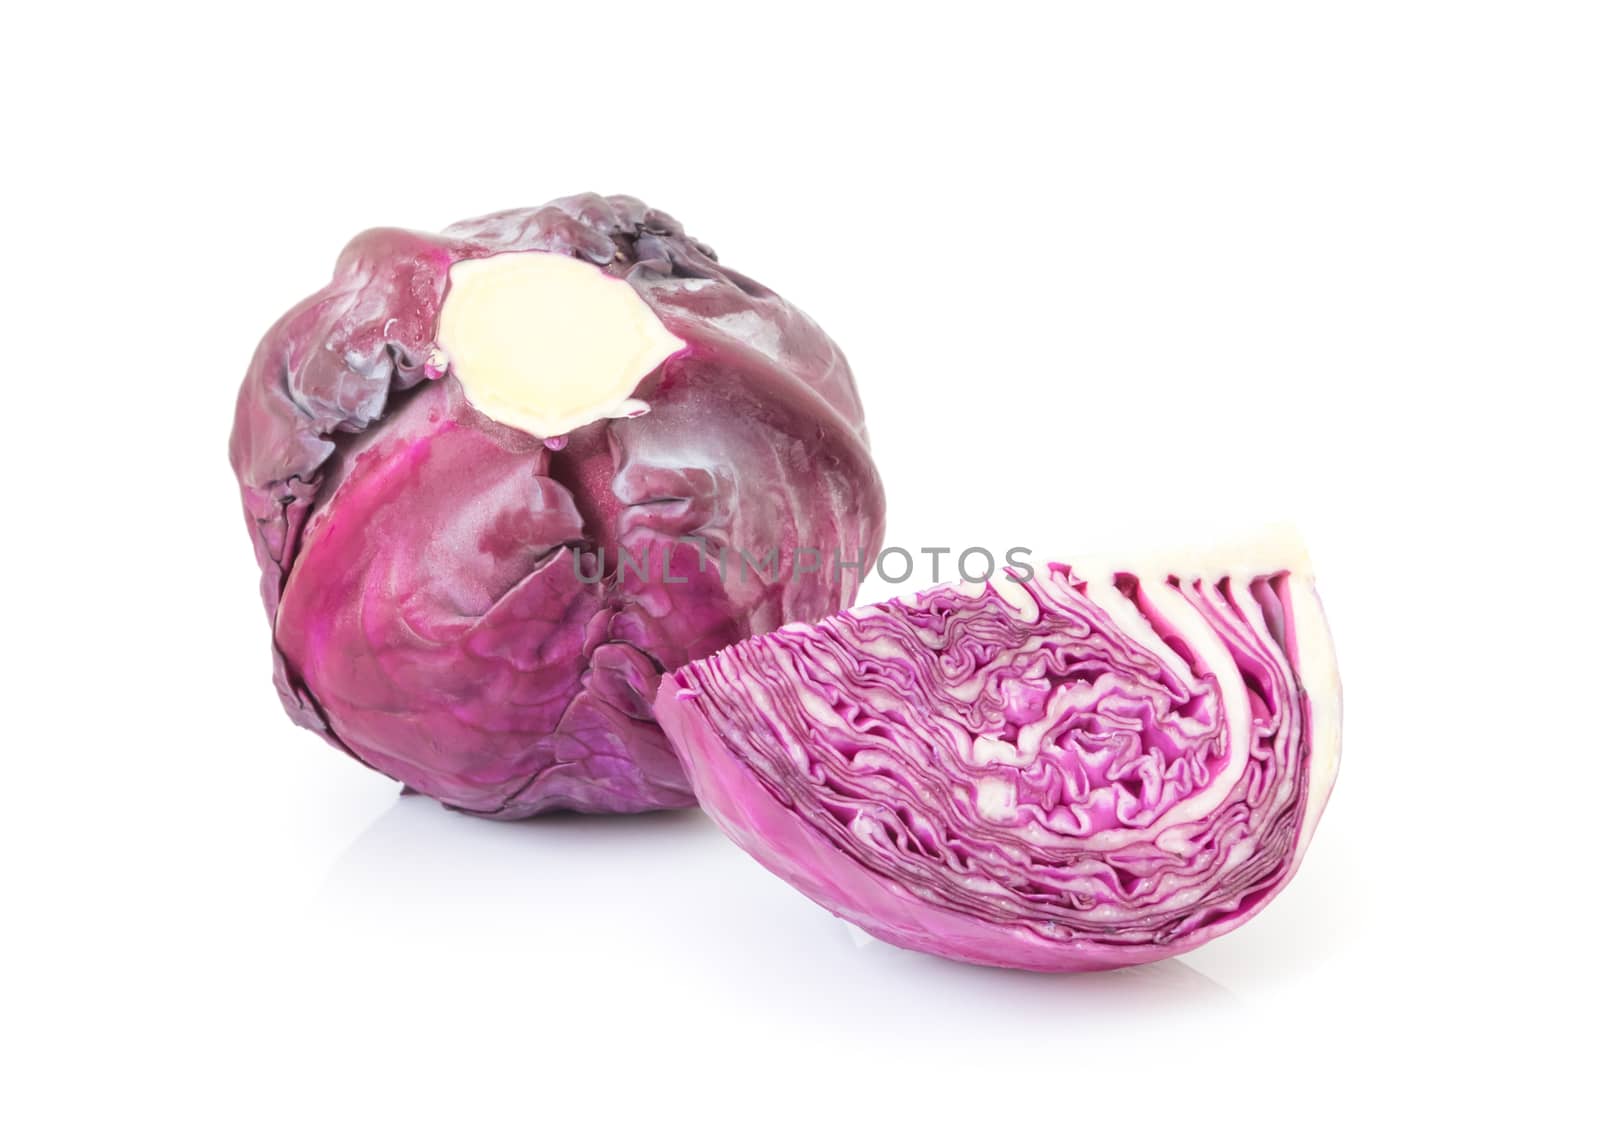 Fresh purple cabbage on white background by pt.pongsak@gmail.com